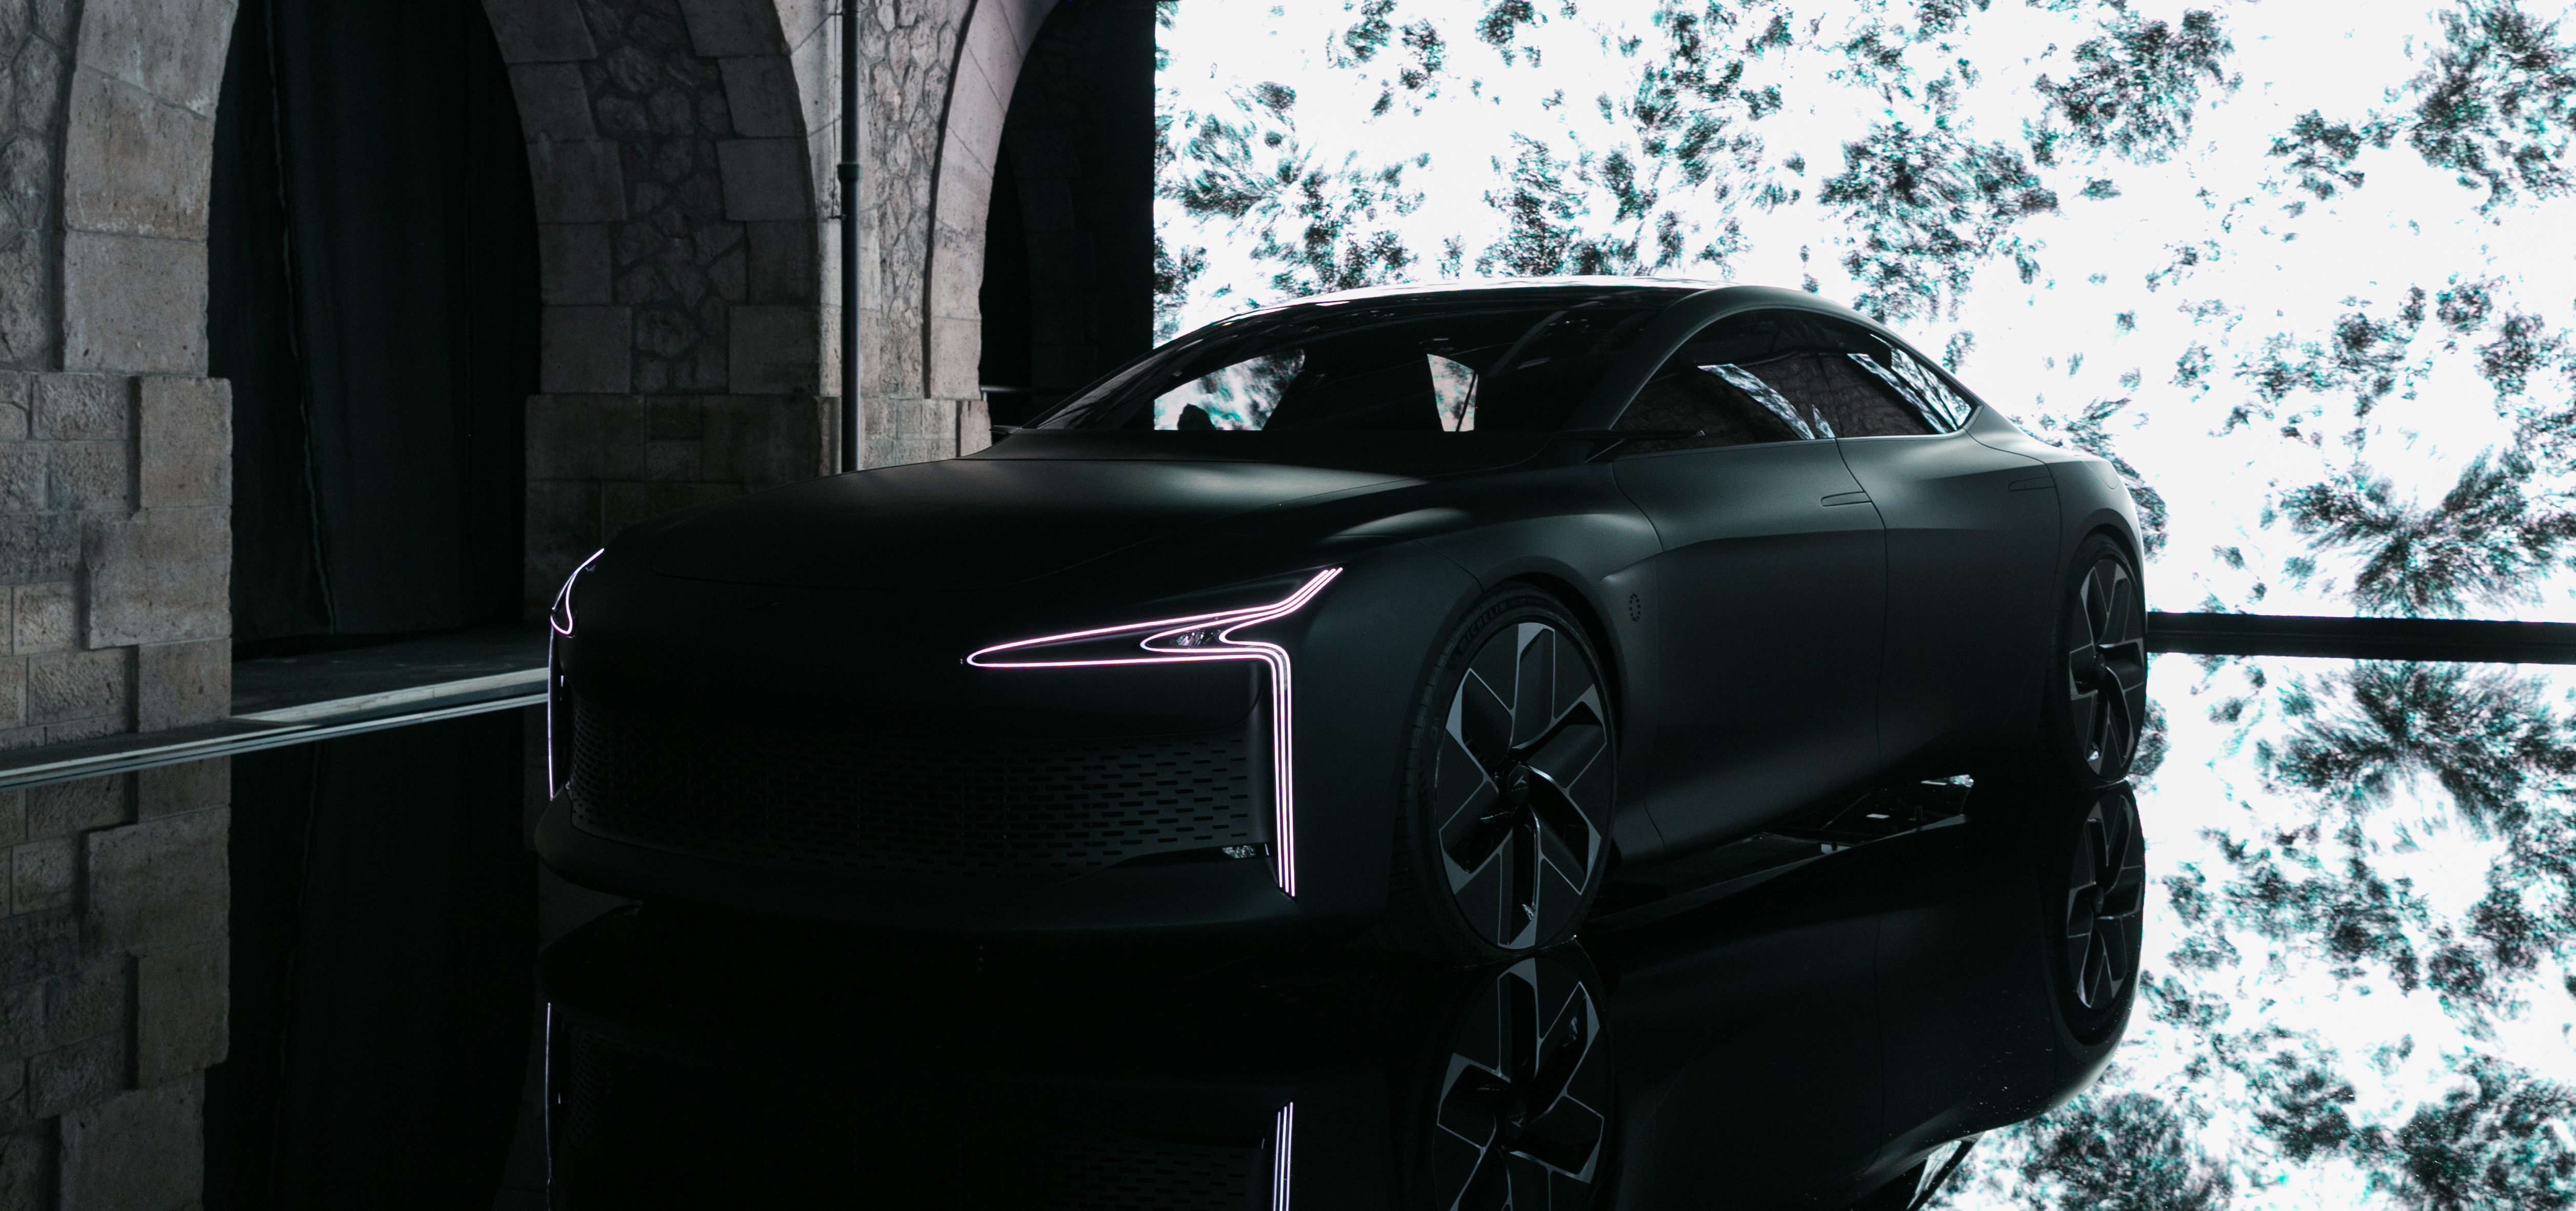 Hopium Machina : à quoi ressemble la voiture du futur ?